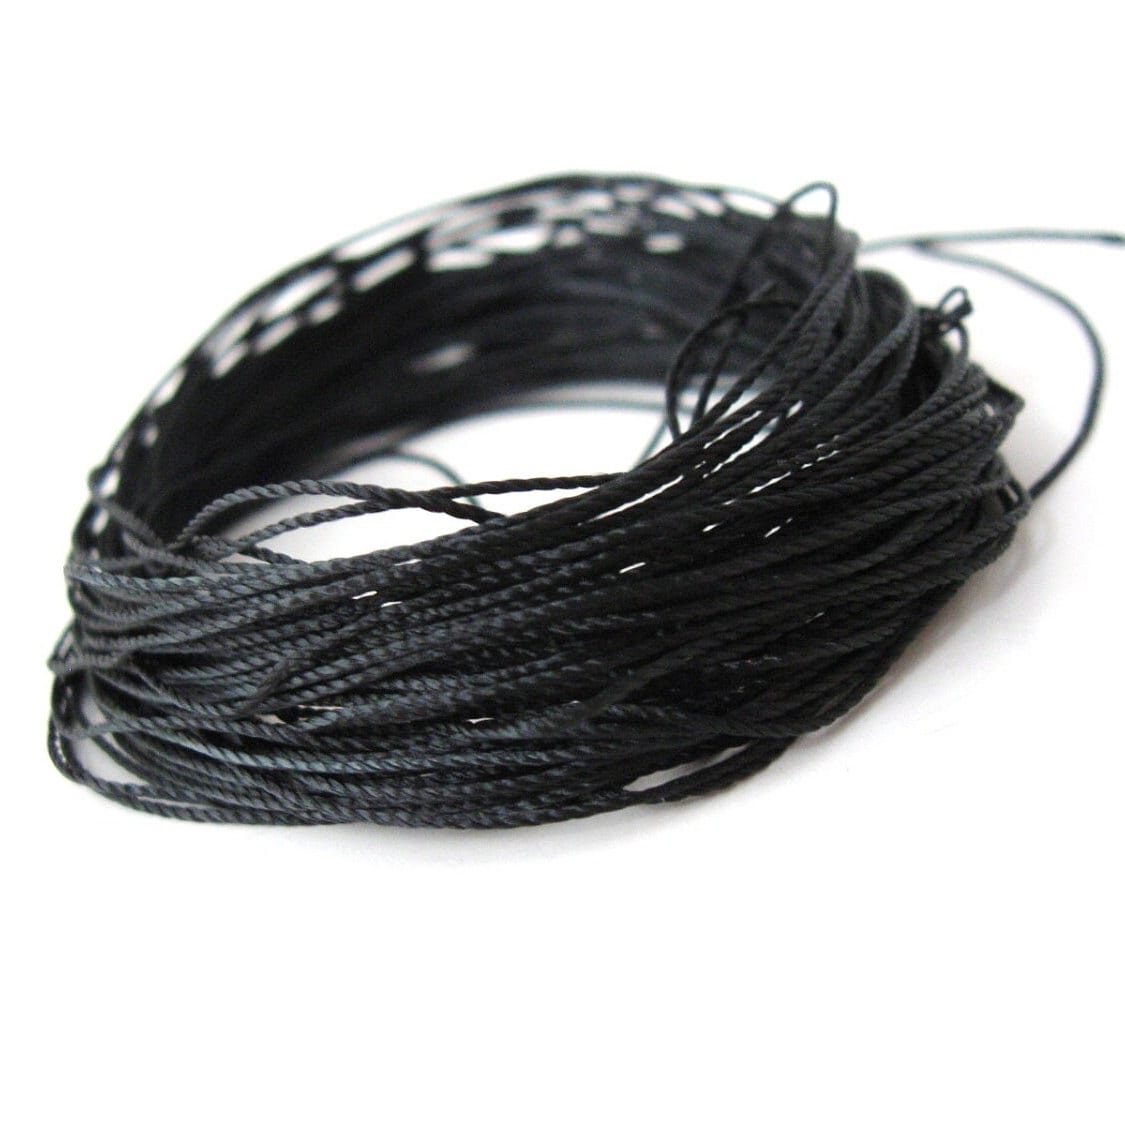 Waxed nylon cord 0.65mm - 20 meters / 65 ft - Black or Brown